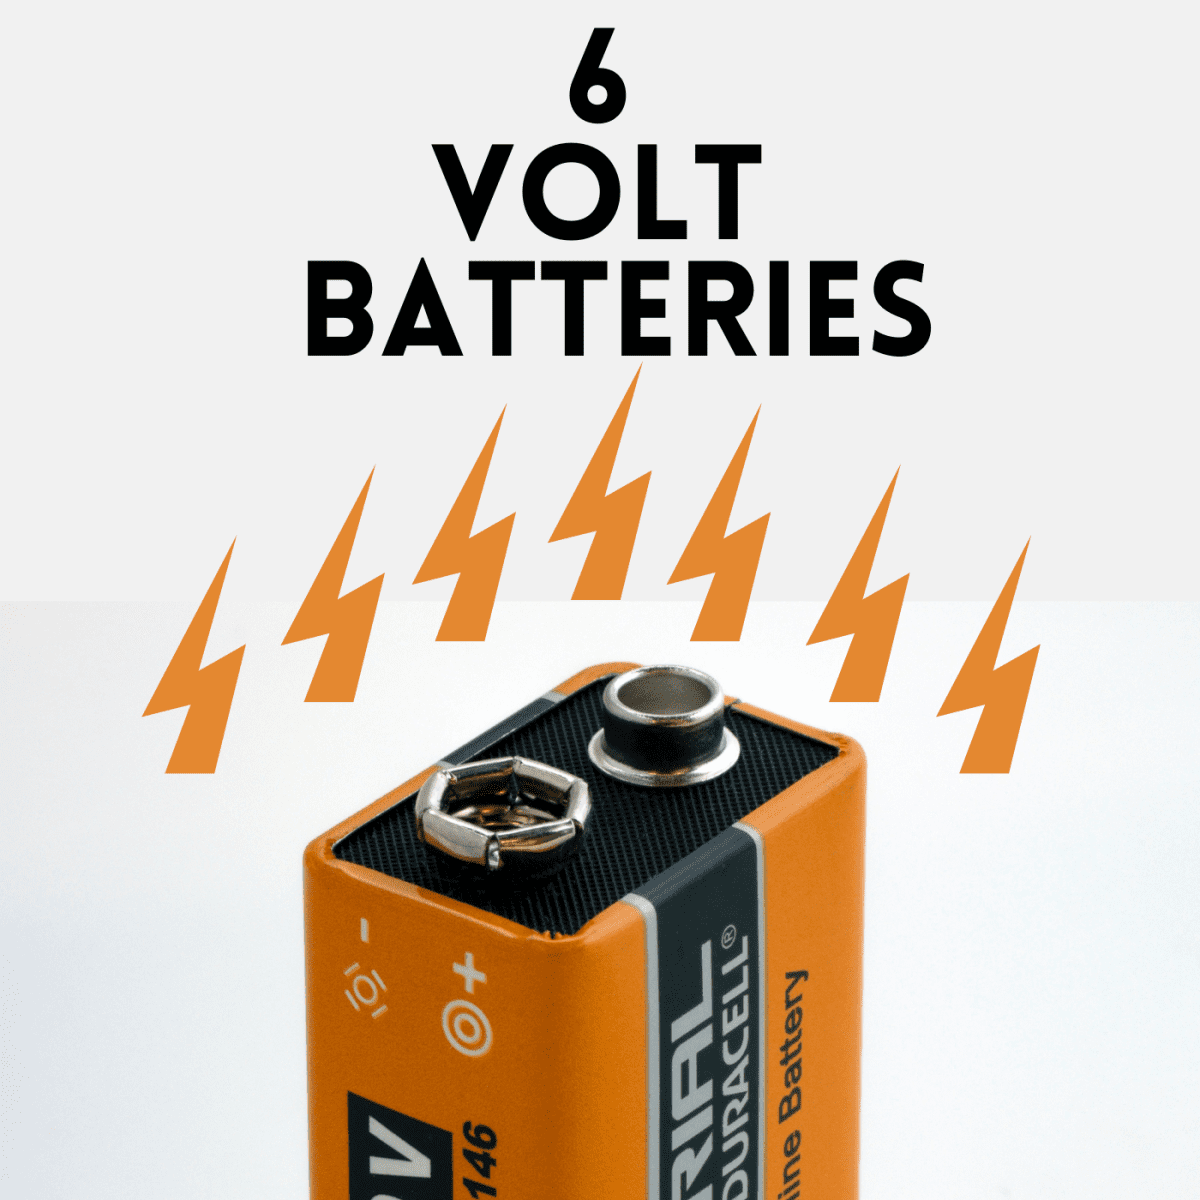 venstre Relativitetsteori tyveri A 6-Volt Battery FAQ - TurboFuture